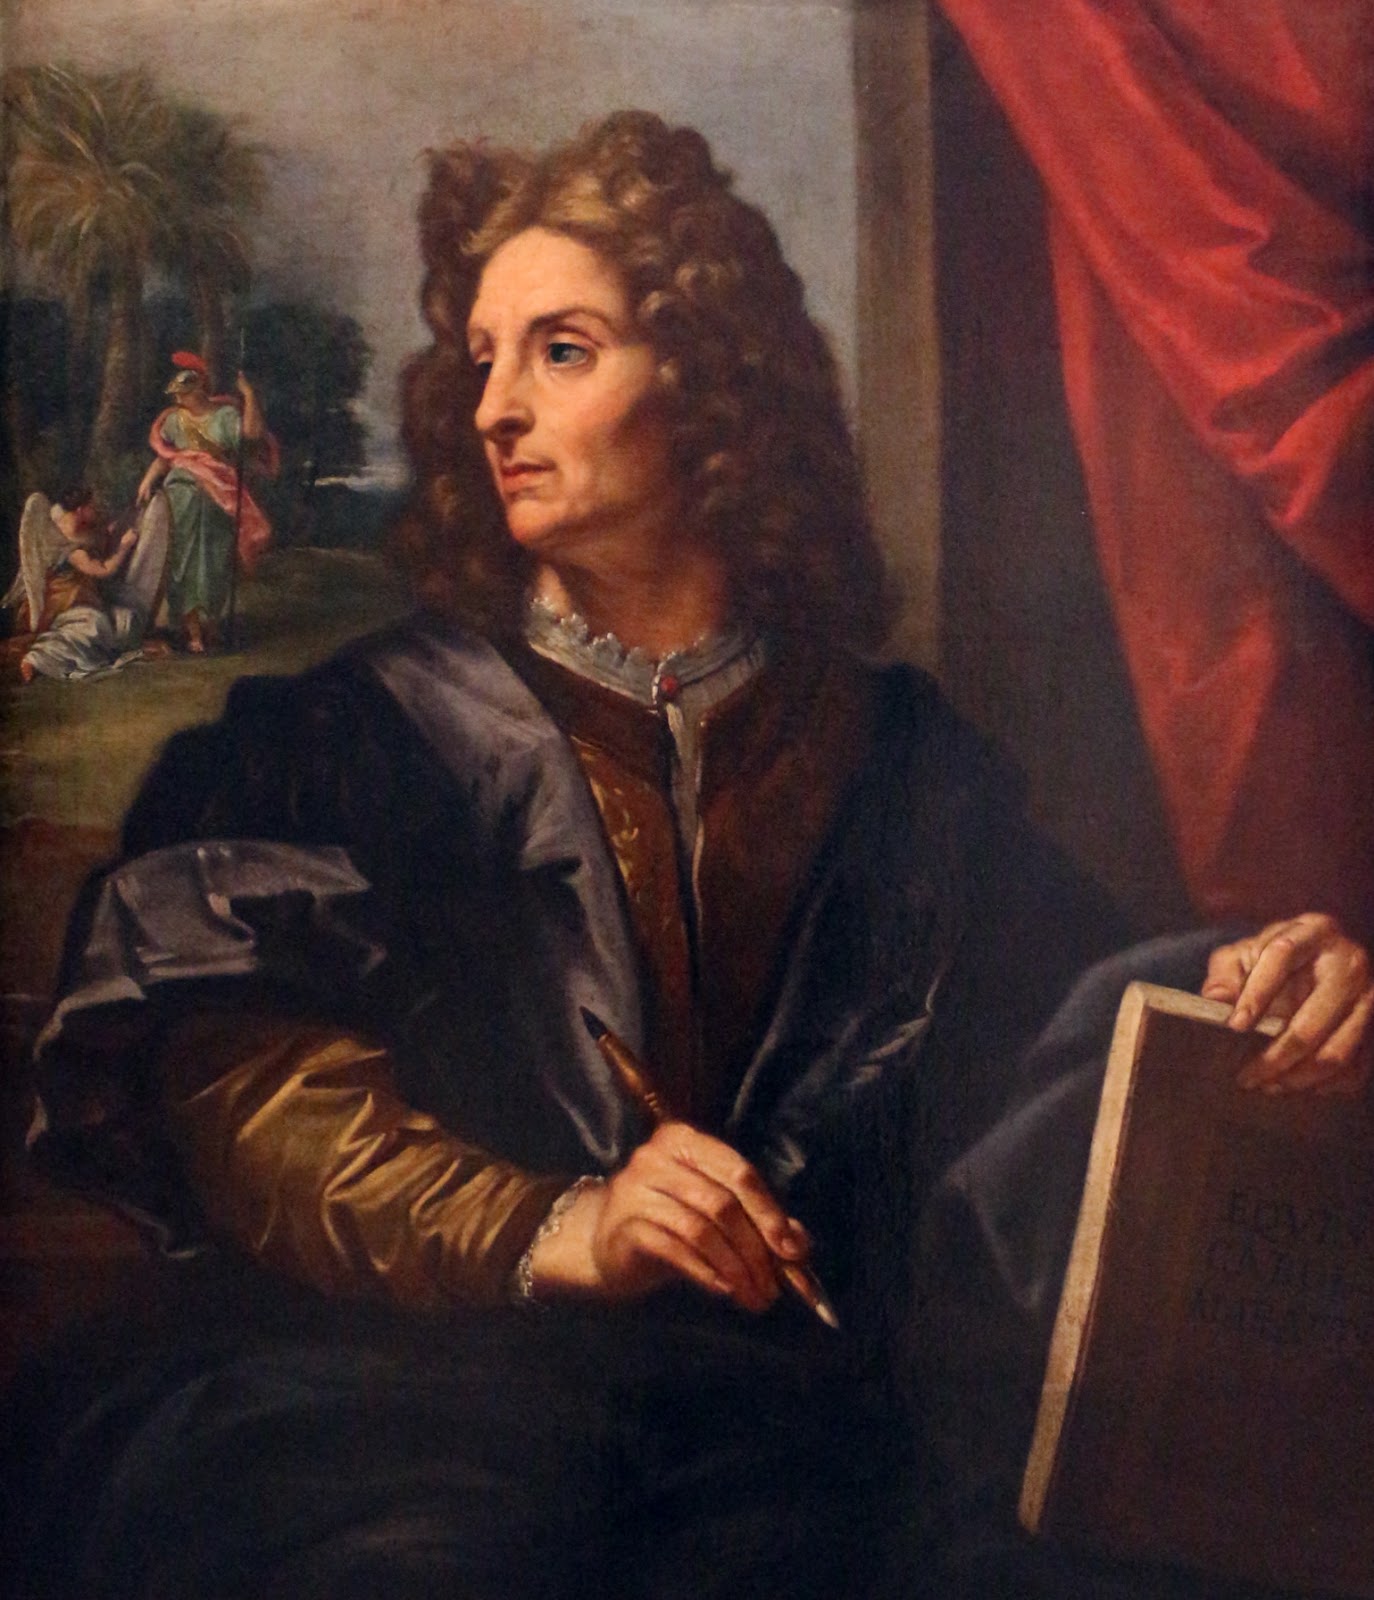 Carlo+Maratta-1625-1713 (18).jpg